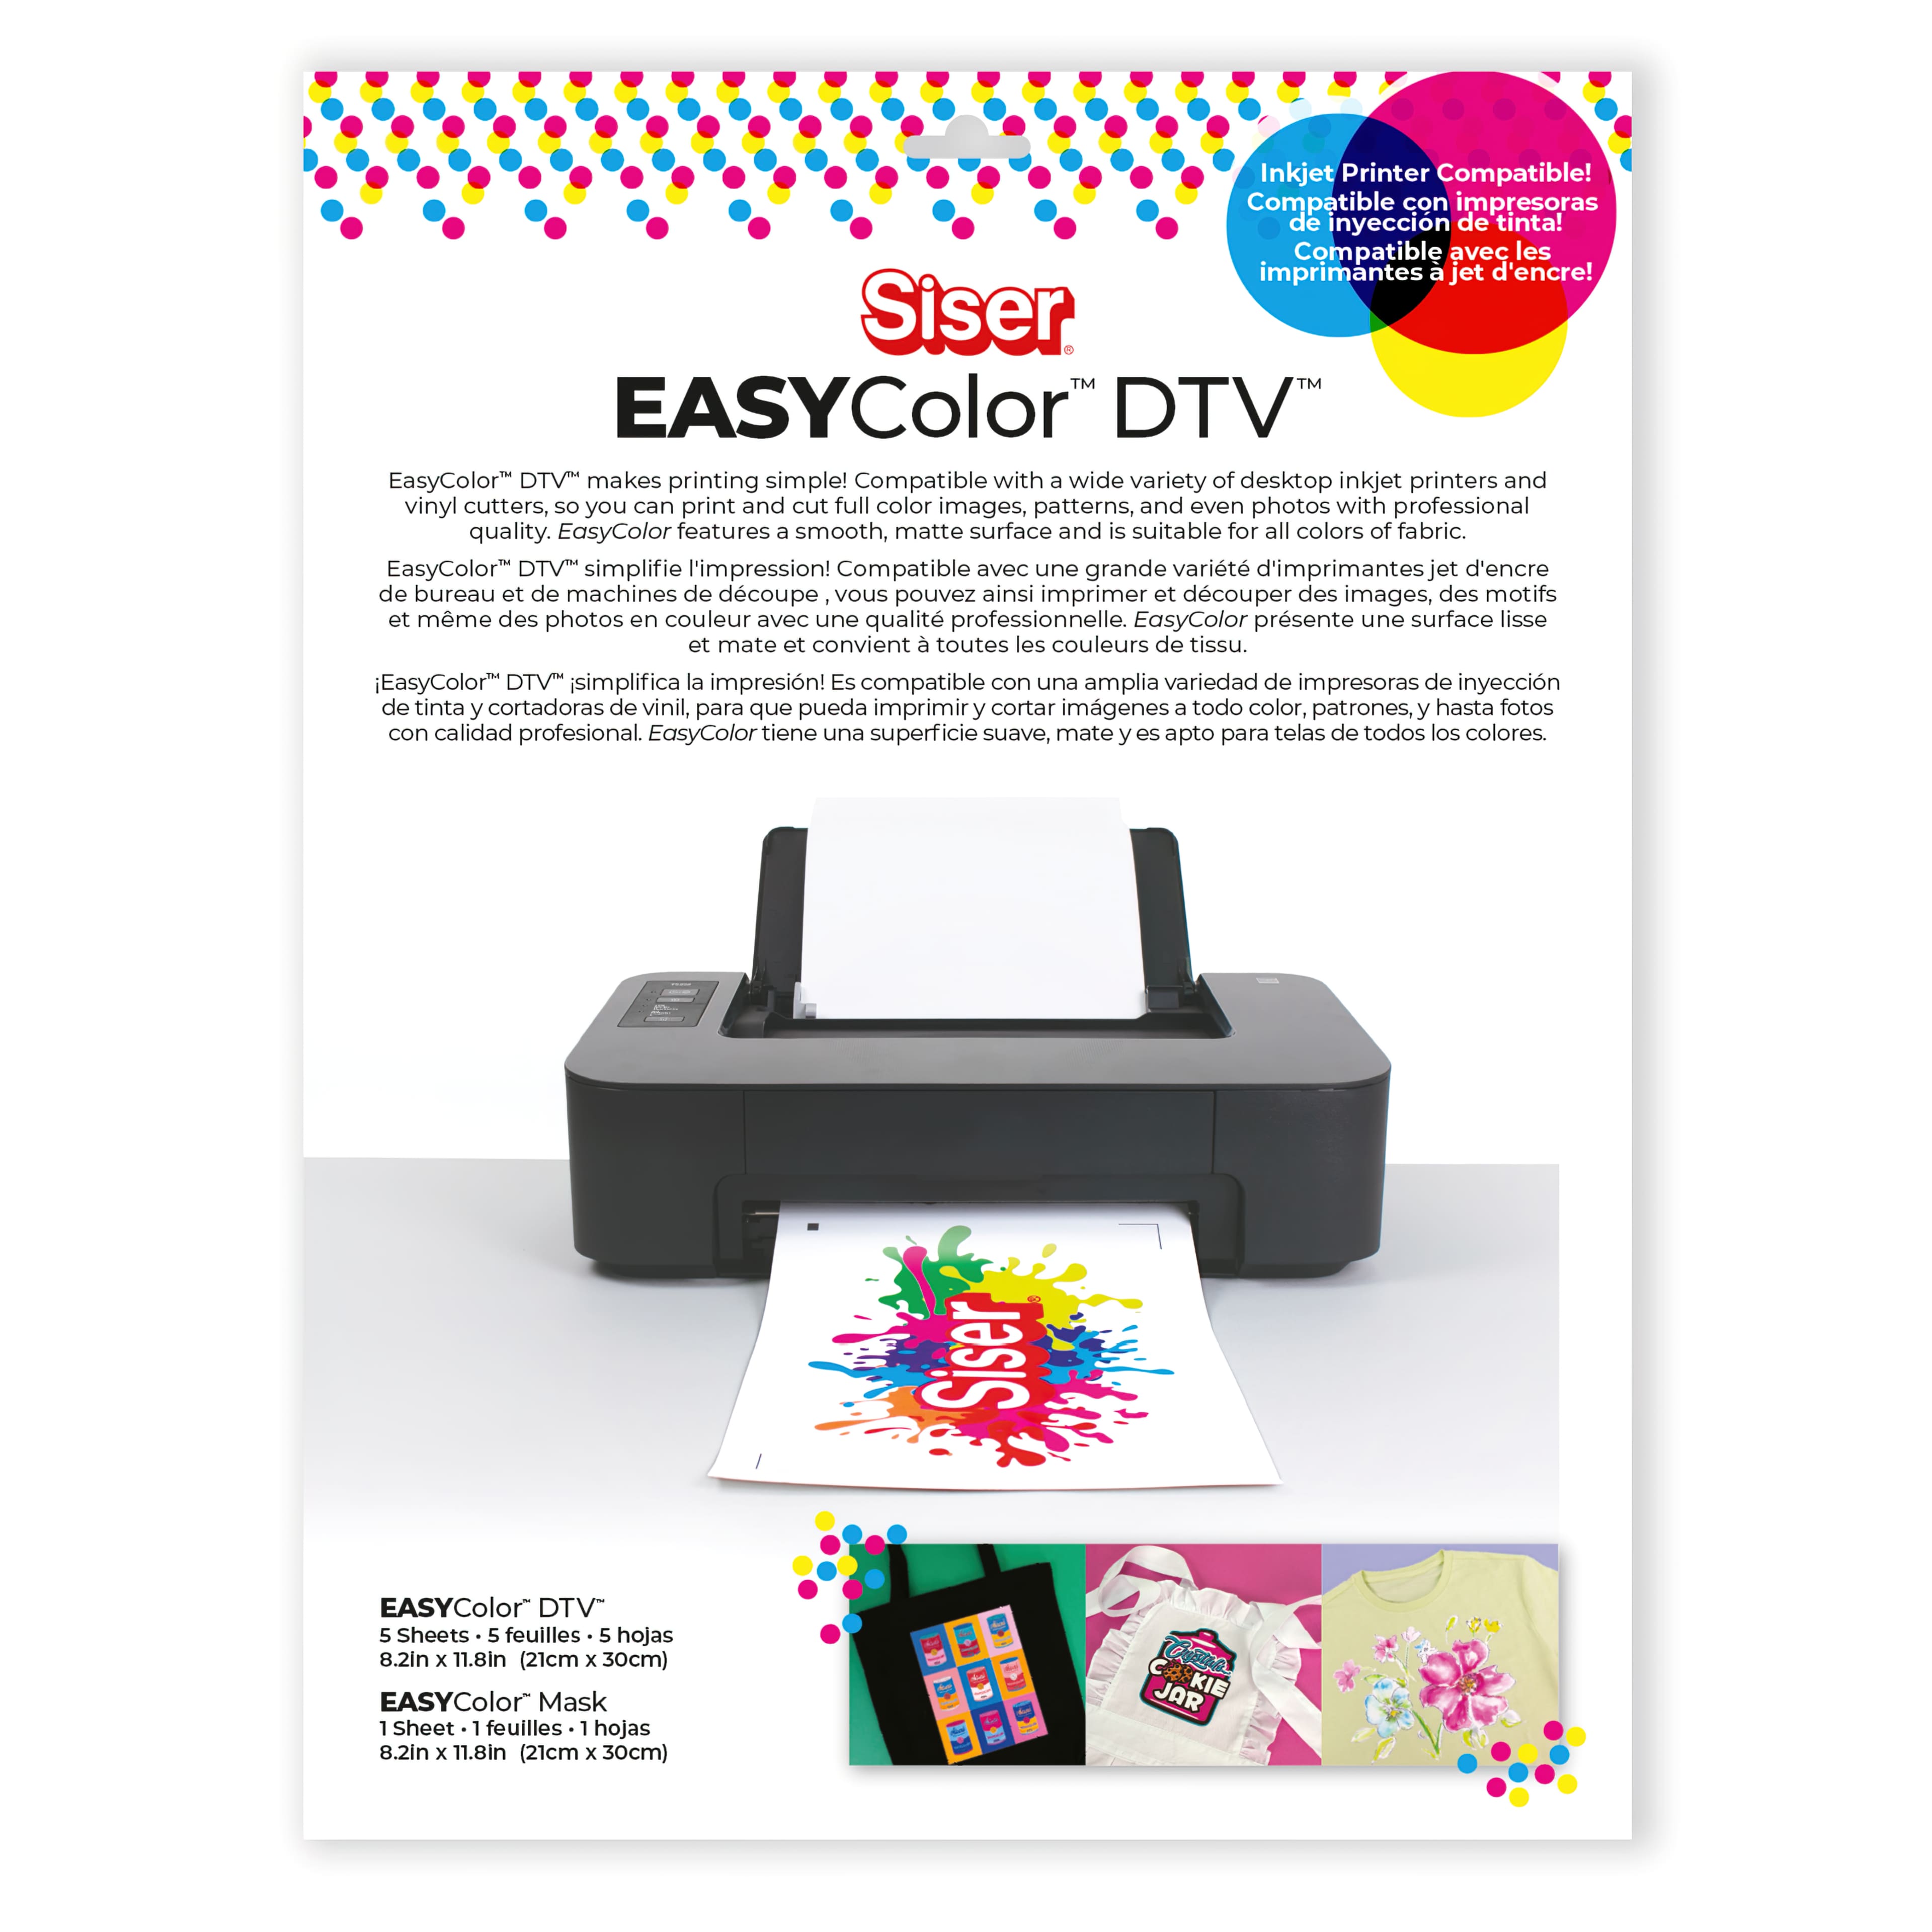 How to use Siser EasyColor DTV for Inkjet Printers